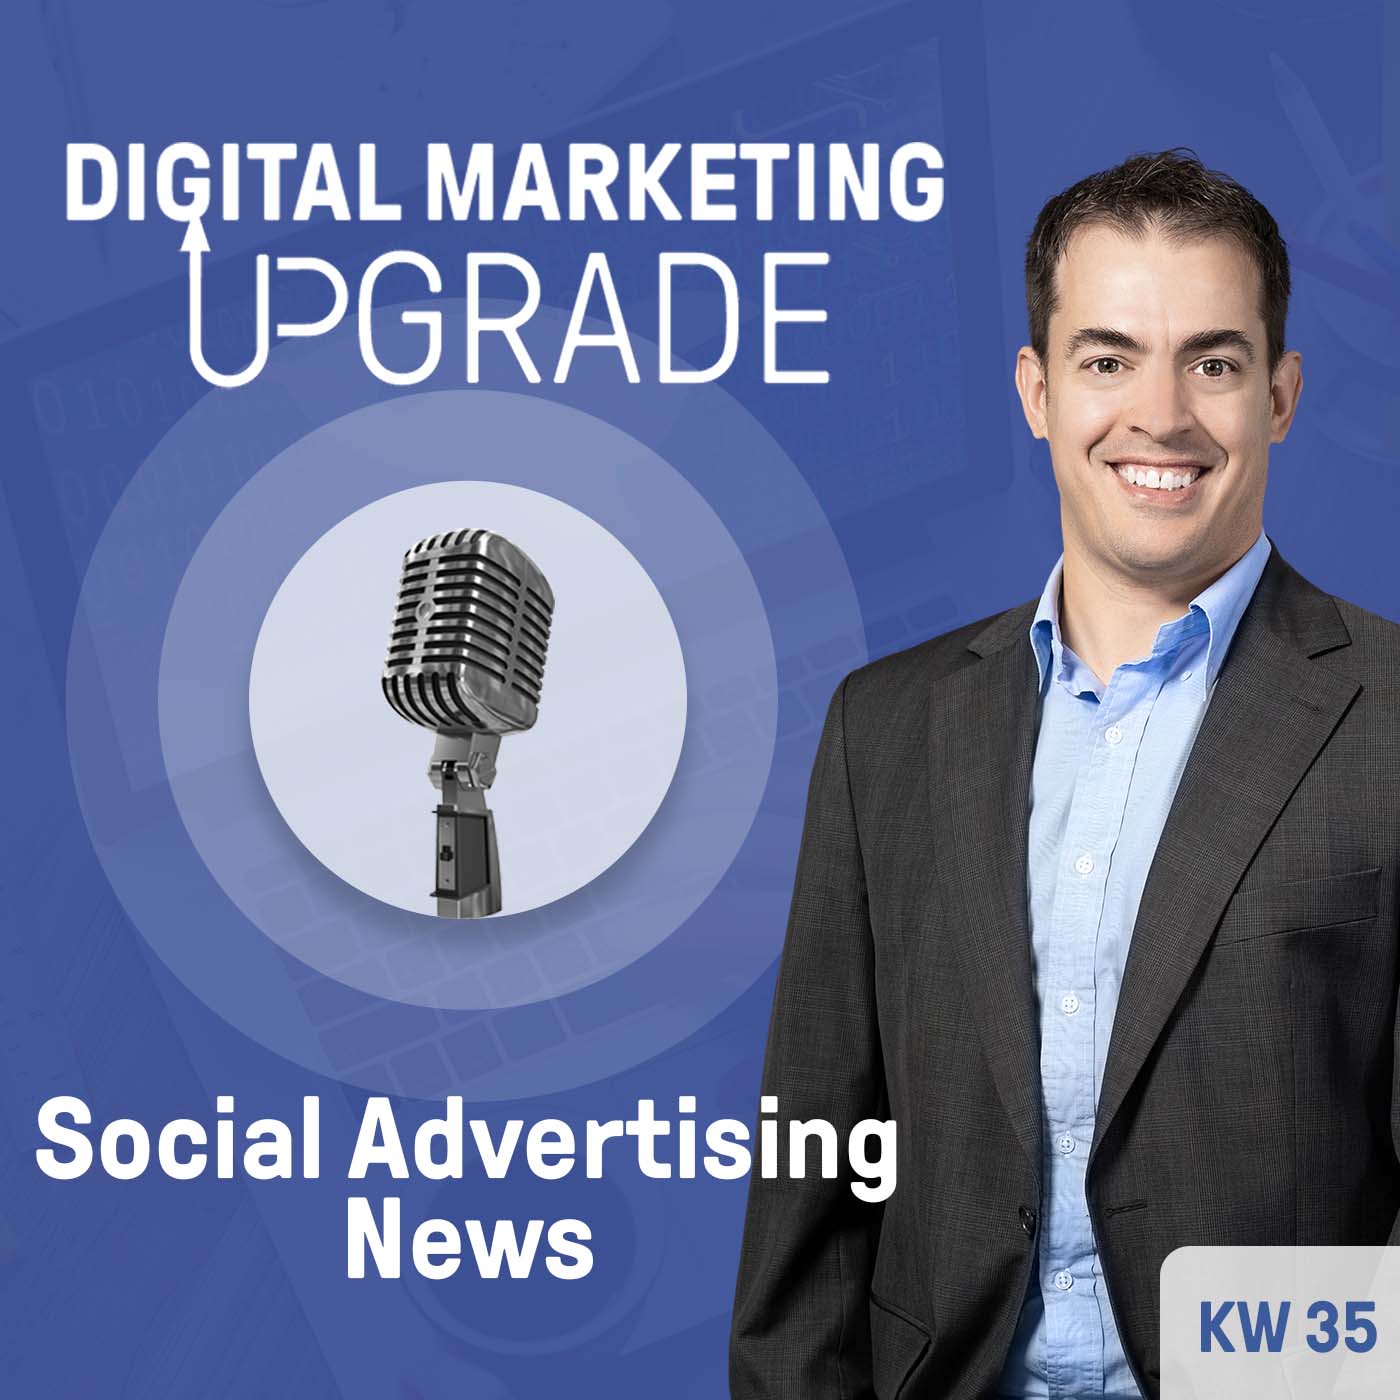 Social Advertising News - KW 35/23